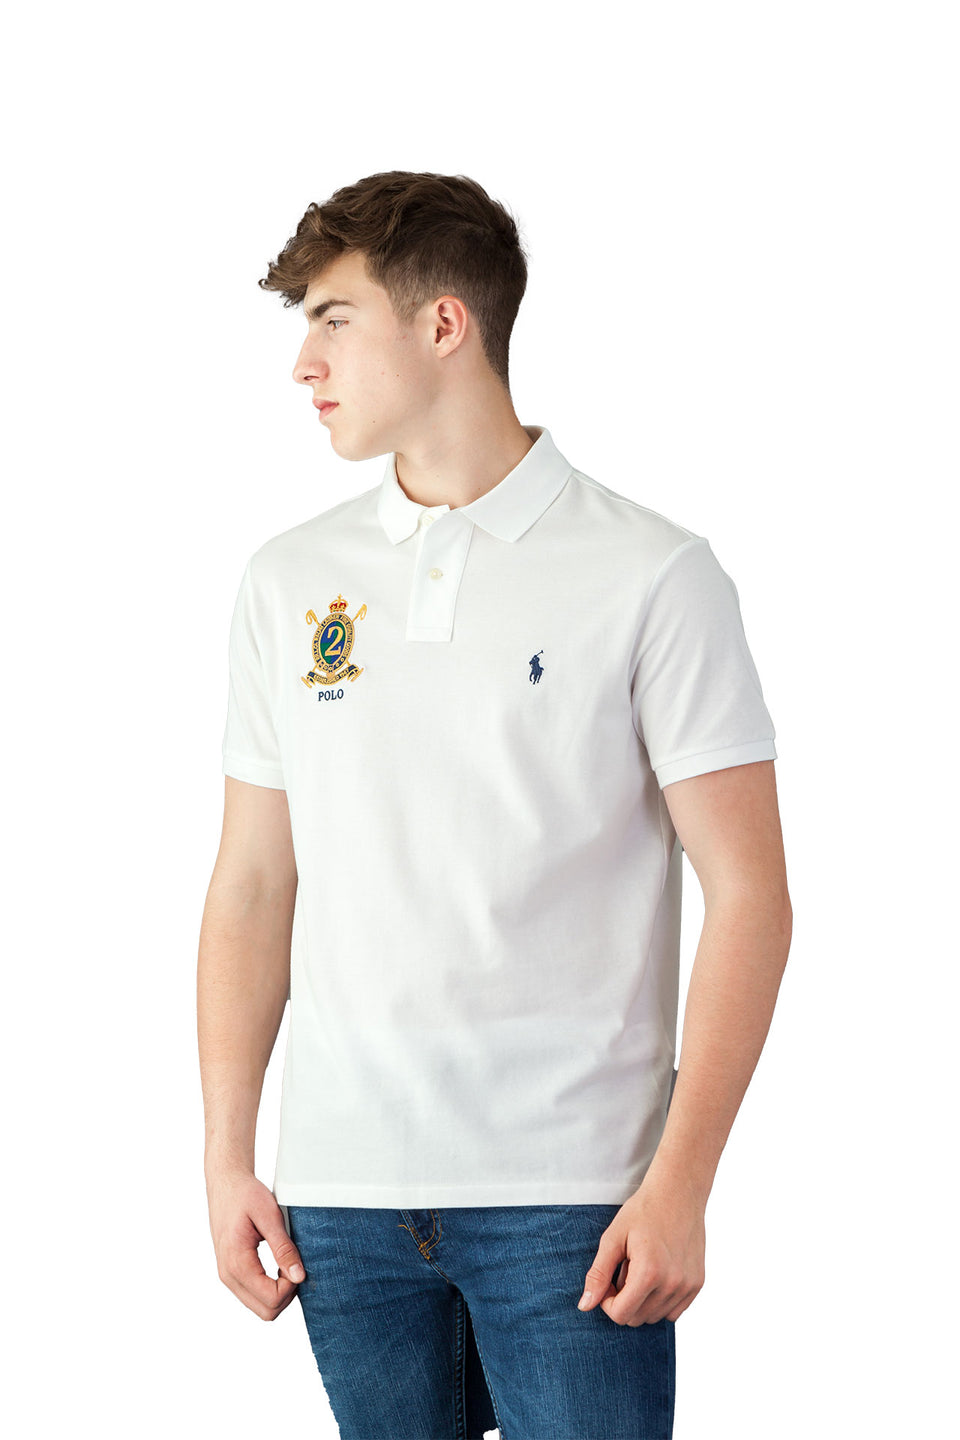 Ralph Lauren White Polo Shirt - Camden Connaught